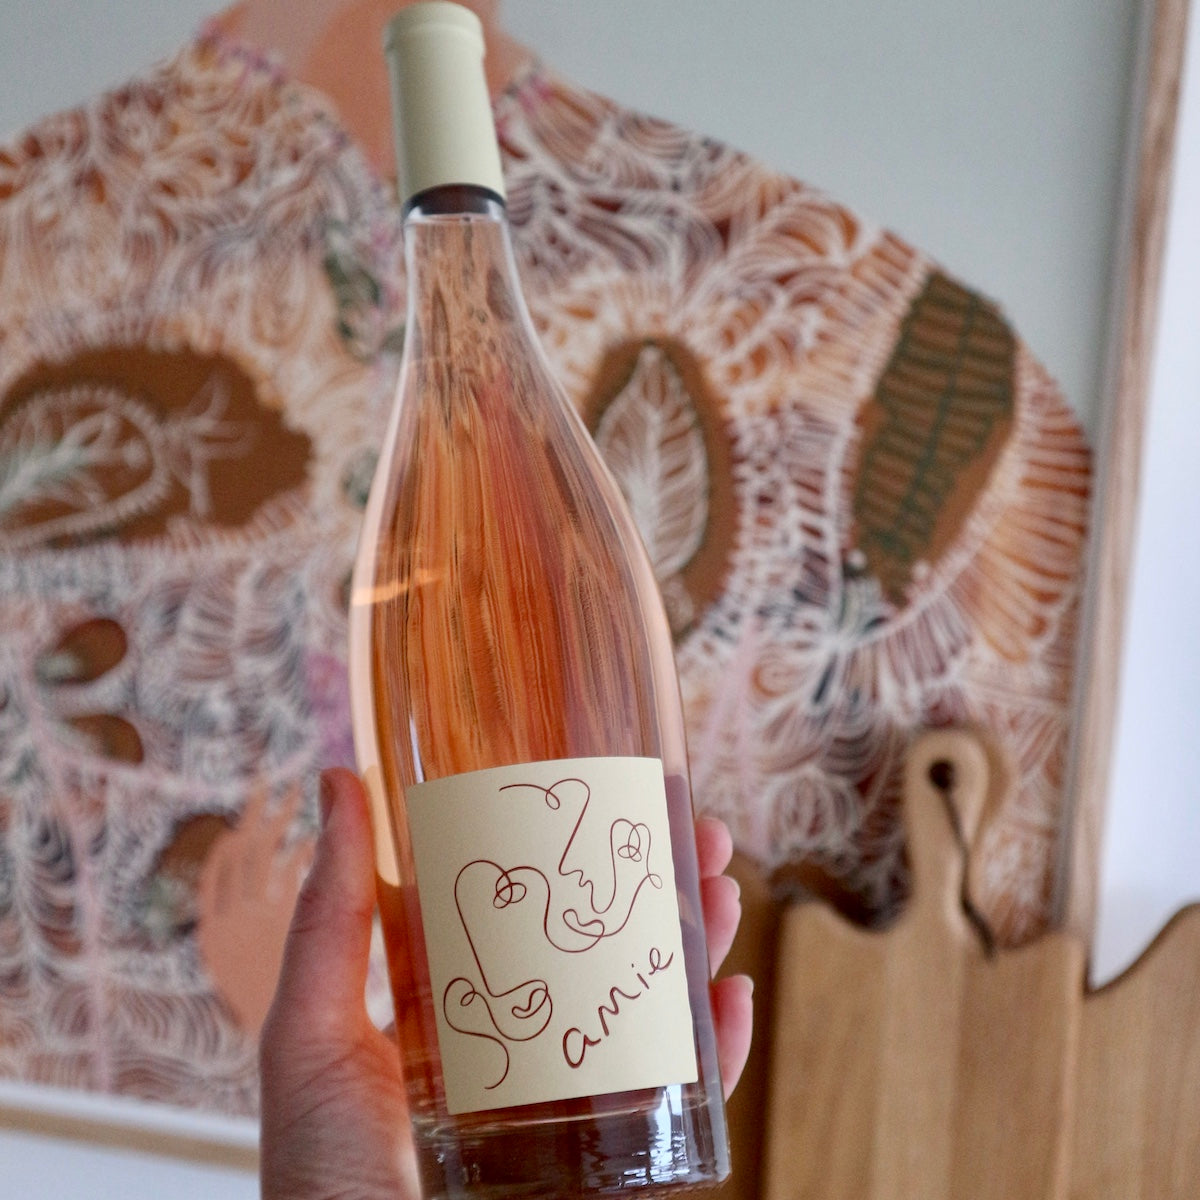 Bottle of Rose Amie Wine